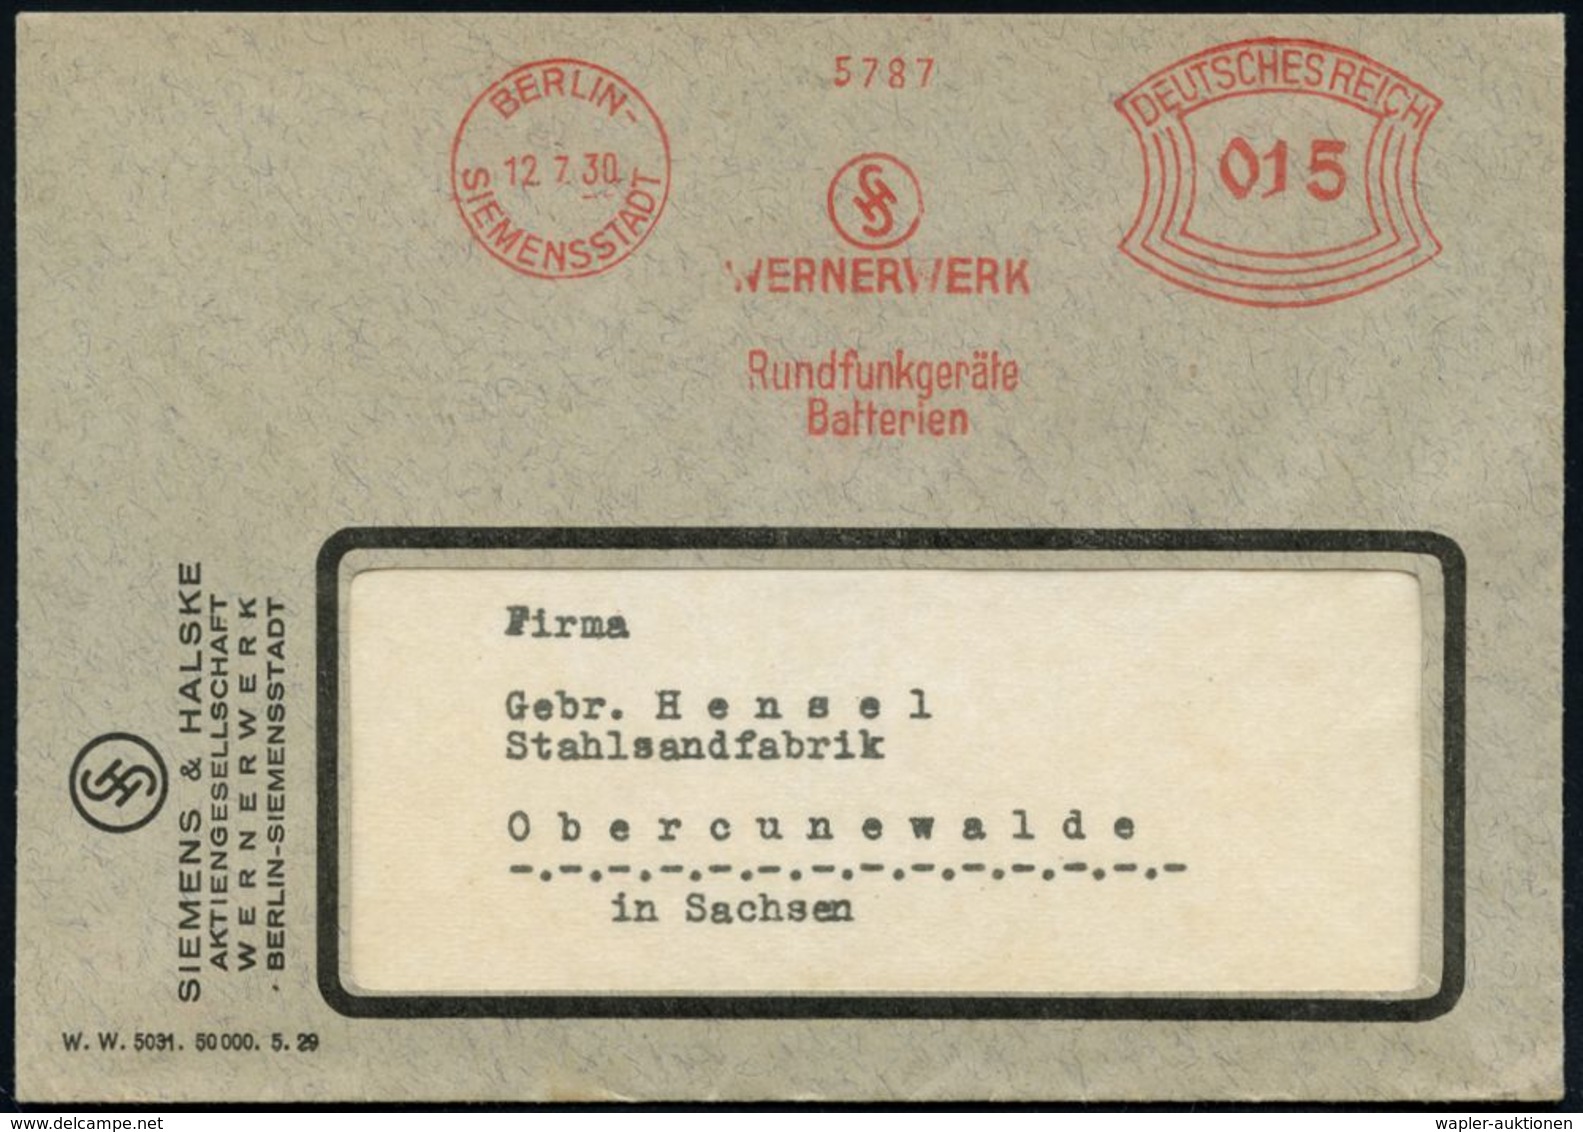 RADIO & RADIO-INDUSTRIE / APPARATE : BERLIN-/ SIEMENSSTADT/ WERNERWERK/ Rundfunkgeräte/ Batterien 1930 (12.7.) AFS (Mono - Unclassified